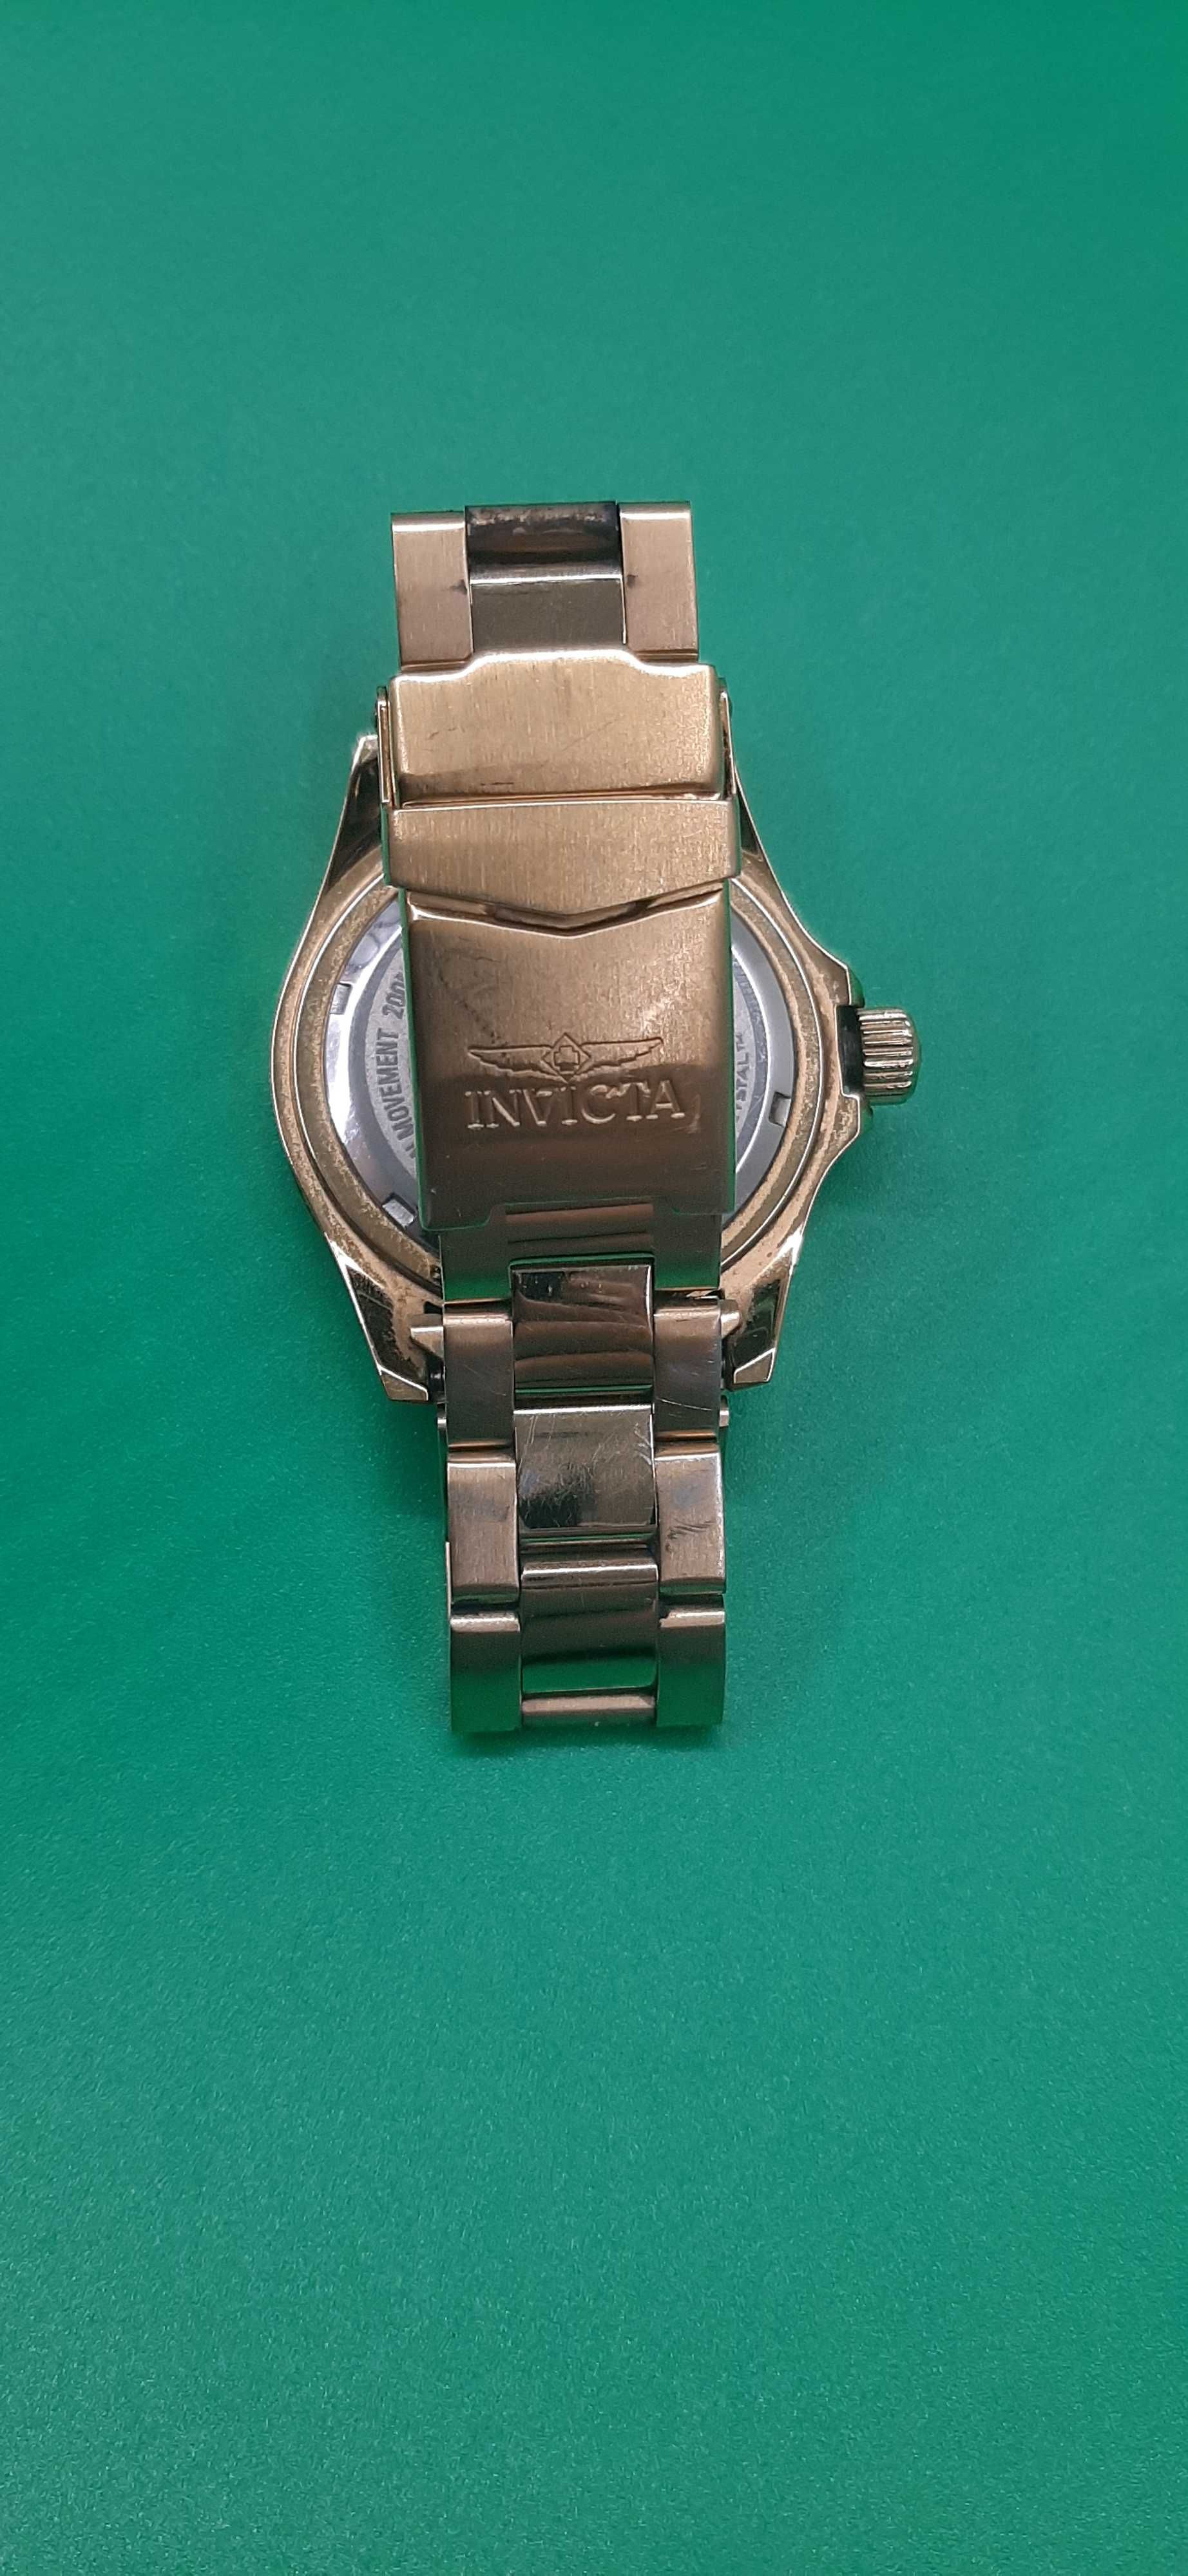 Zegarek Invicta Pro Diver 26974